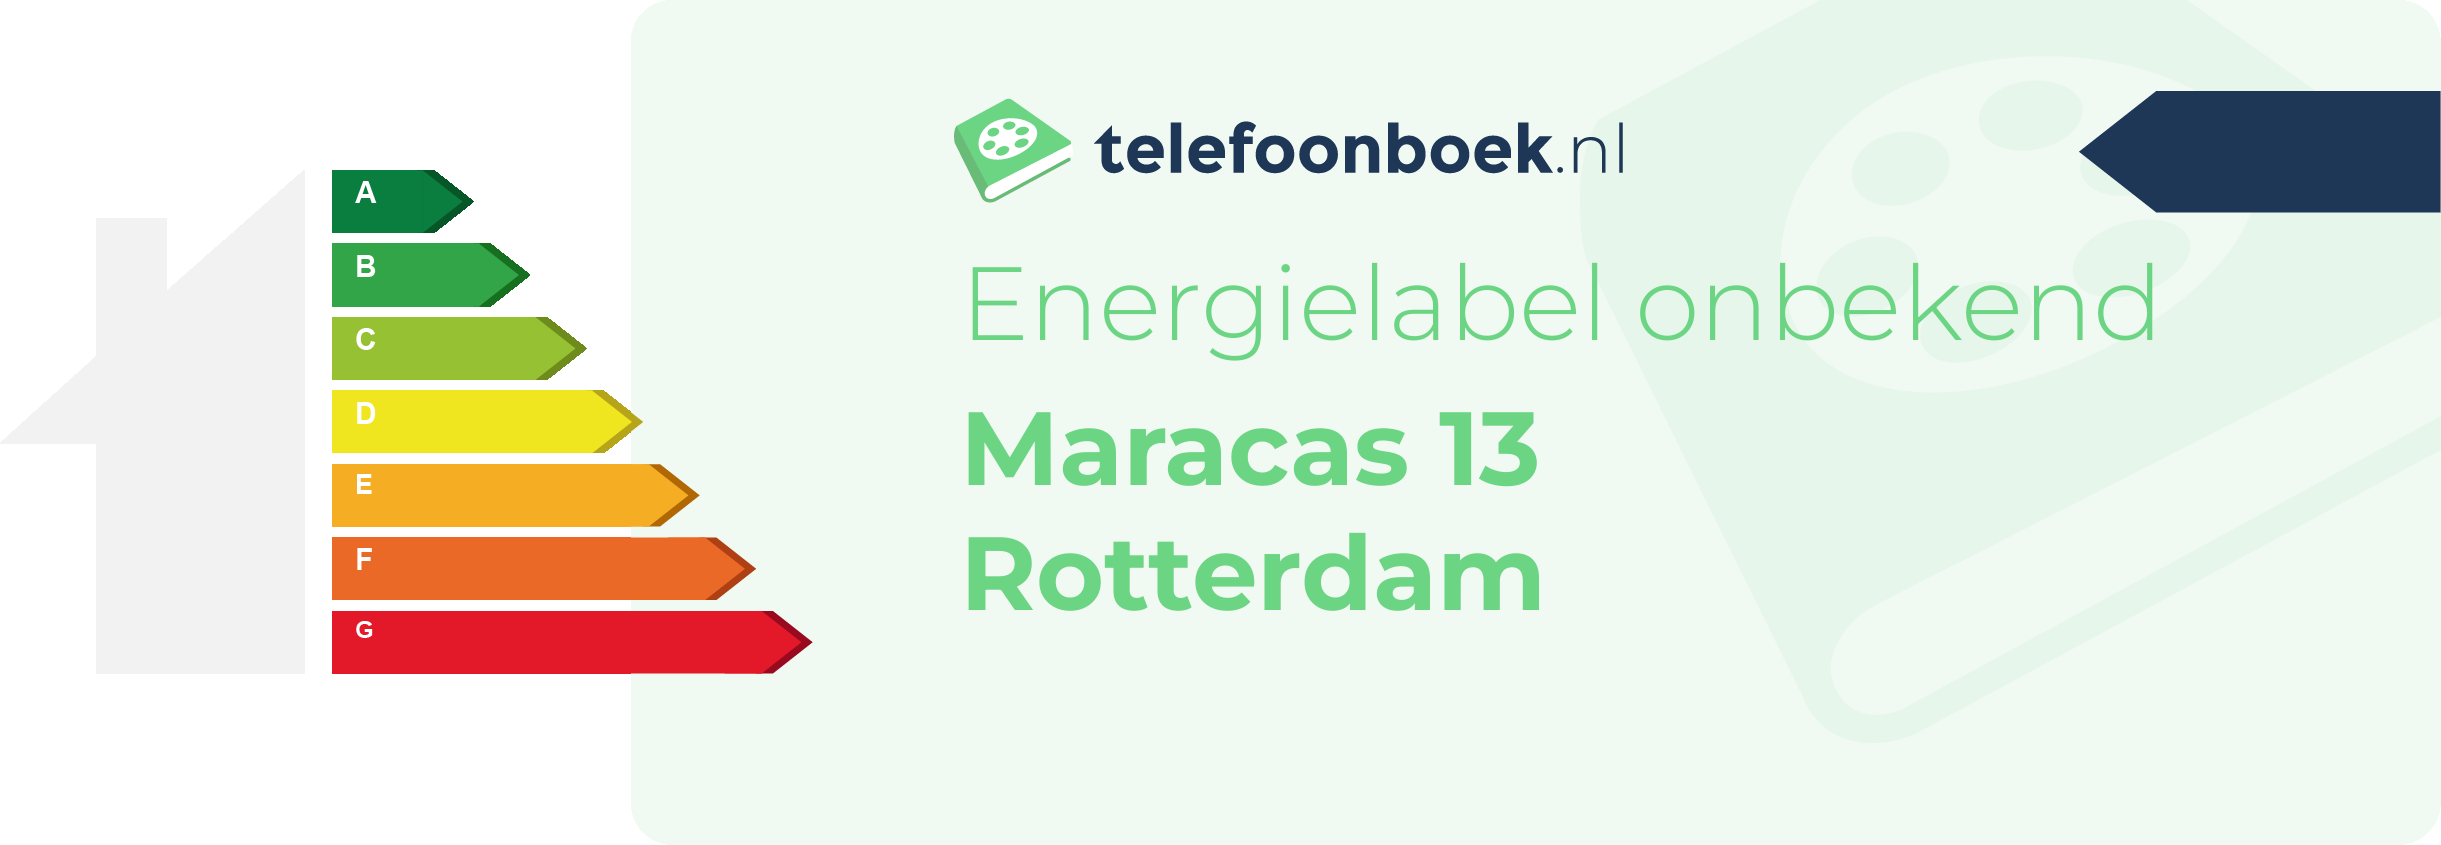 Energielabel Maracas 13 Rotterdam